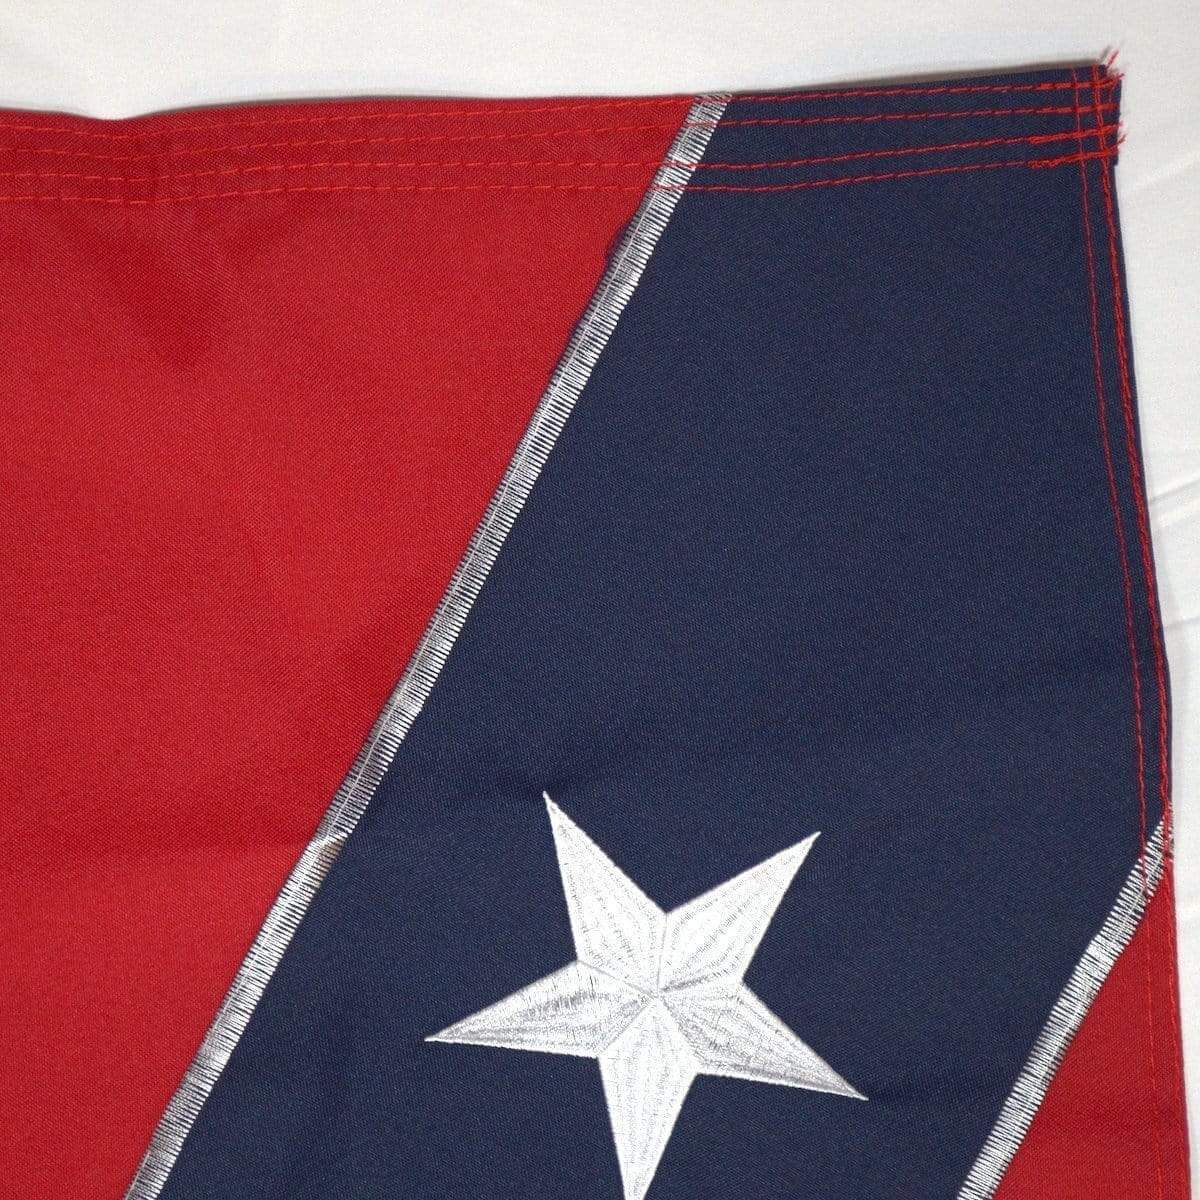 RU Flag Rebel Flag - Confederate Flag -  Nylon Embroidered - Collectors Edition 2x3,3x5,4x6,5x8,6x10